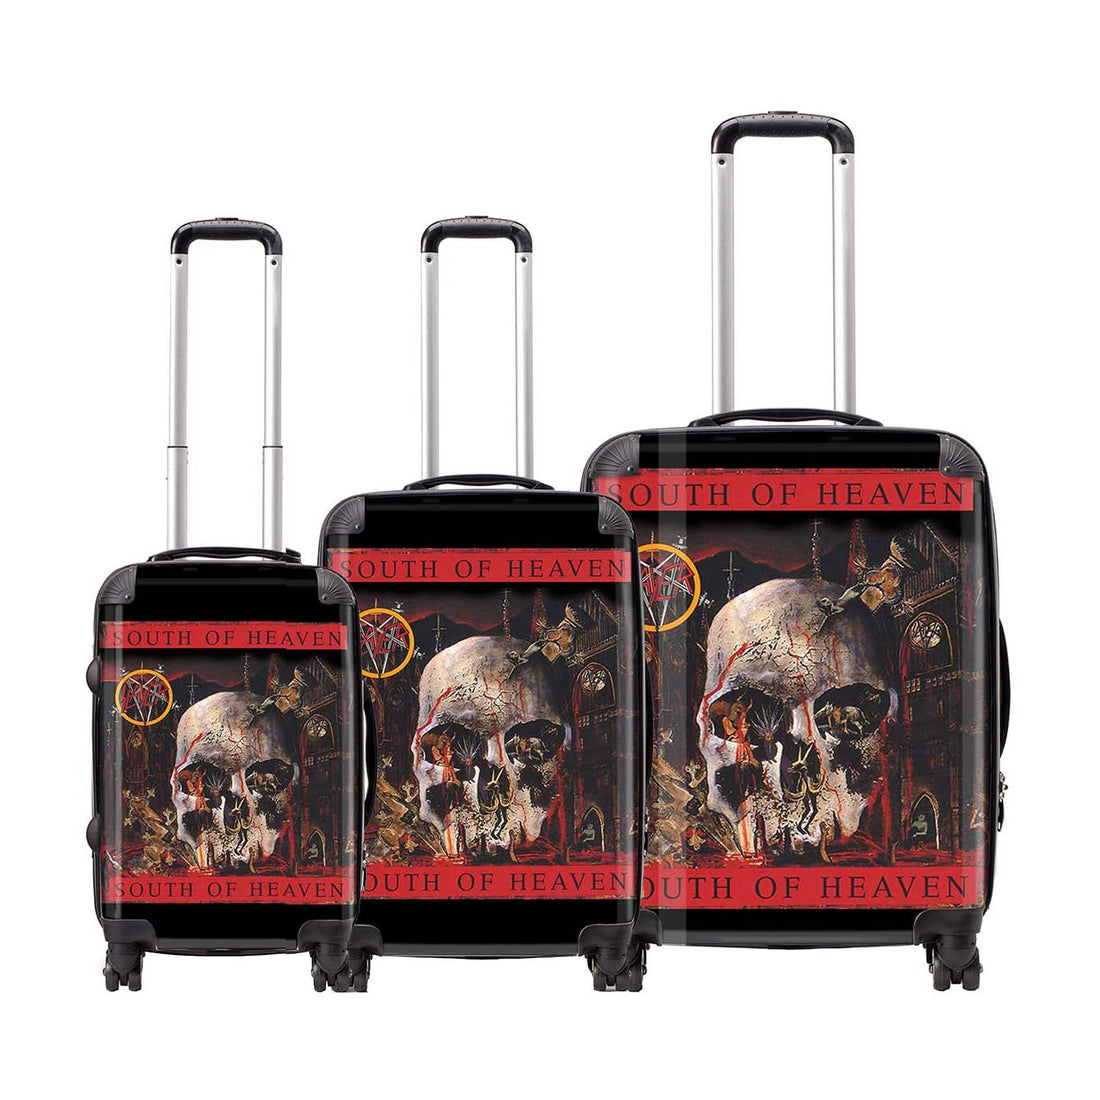 Rocksax Slayer Travel Bag Luggage - South Of Heaven